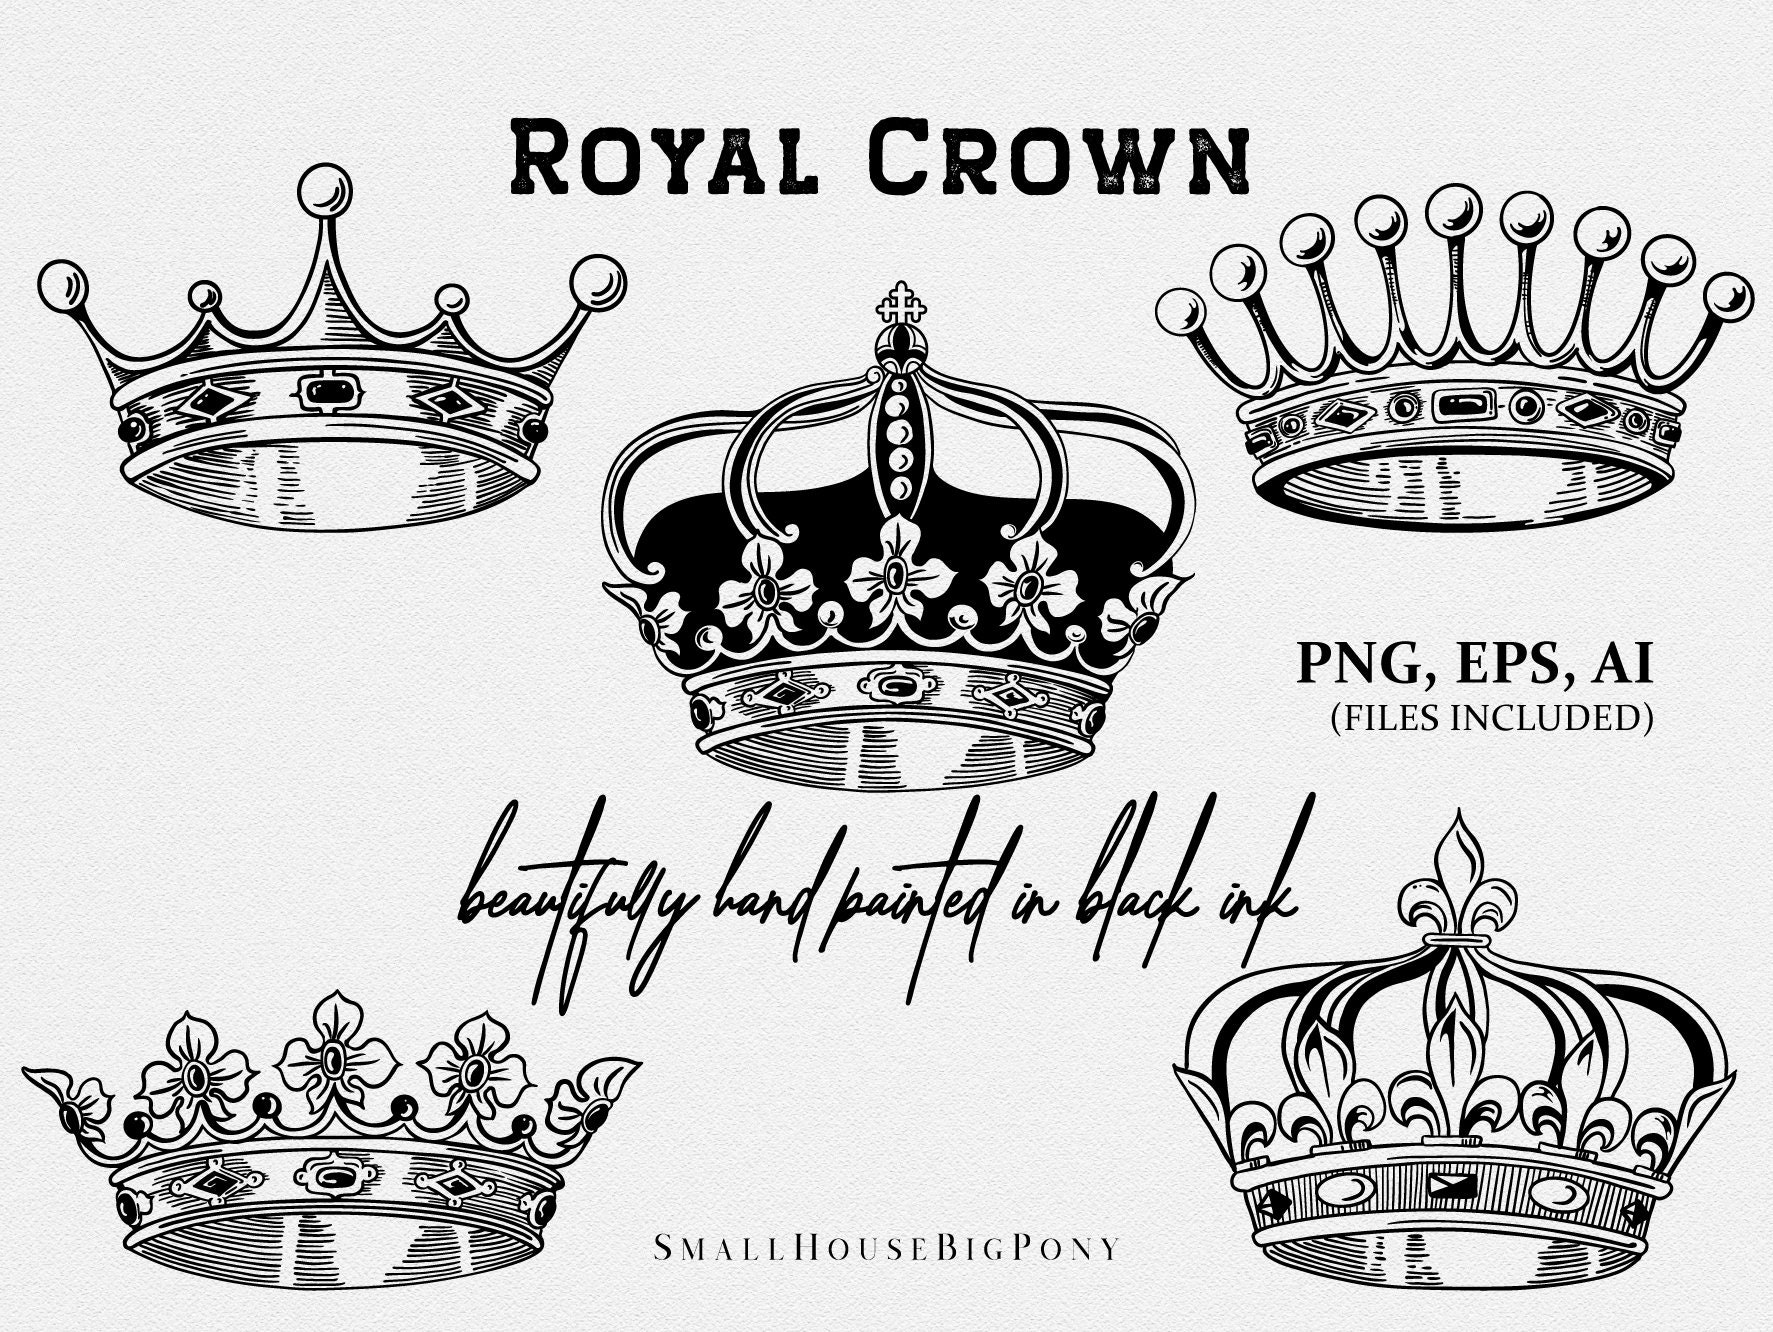 Royal Hat PNG Transparent Images Free Download, Vector Files